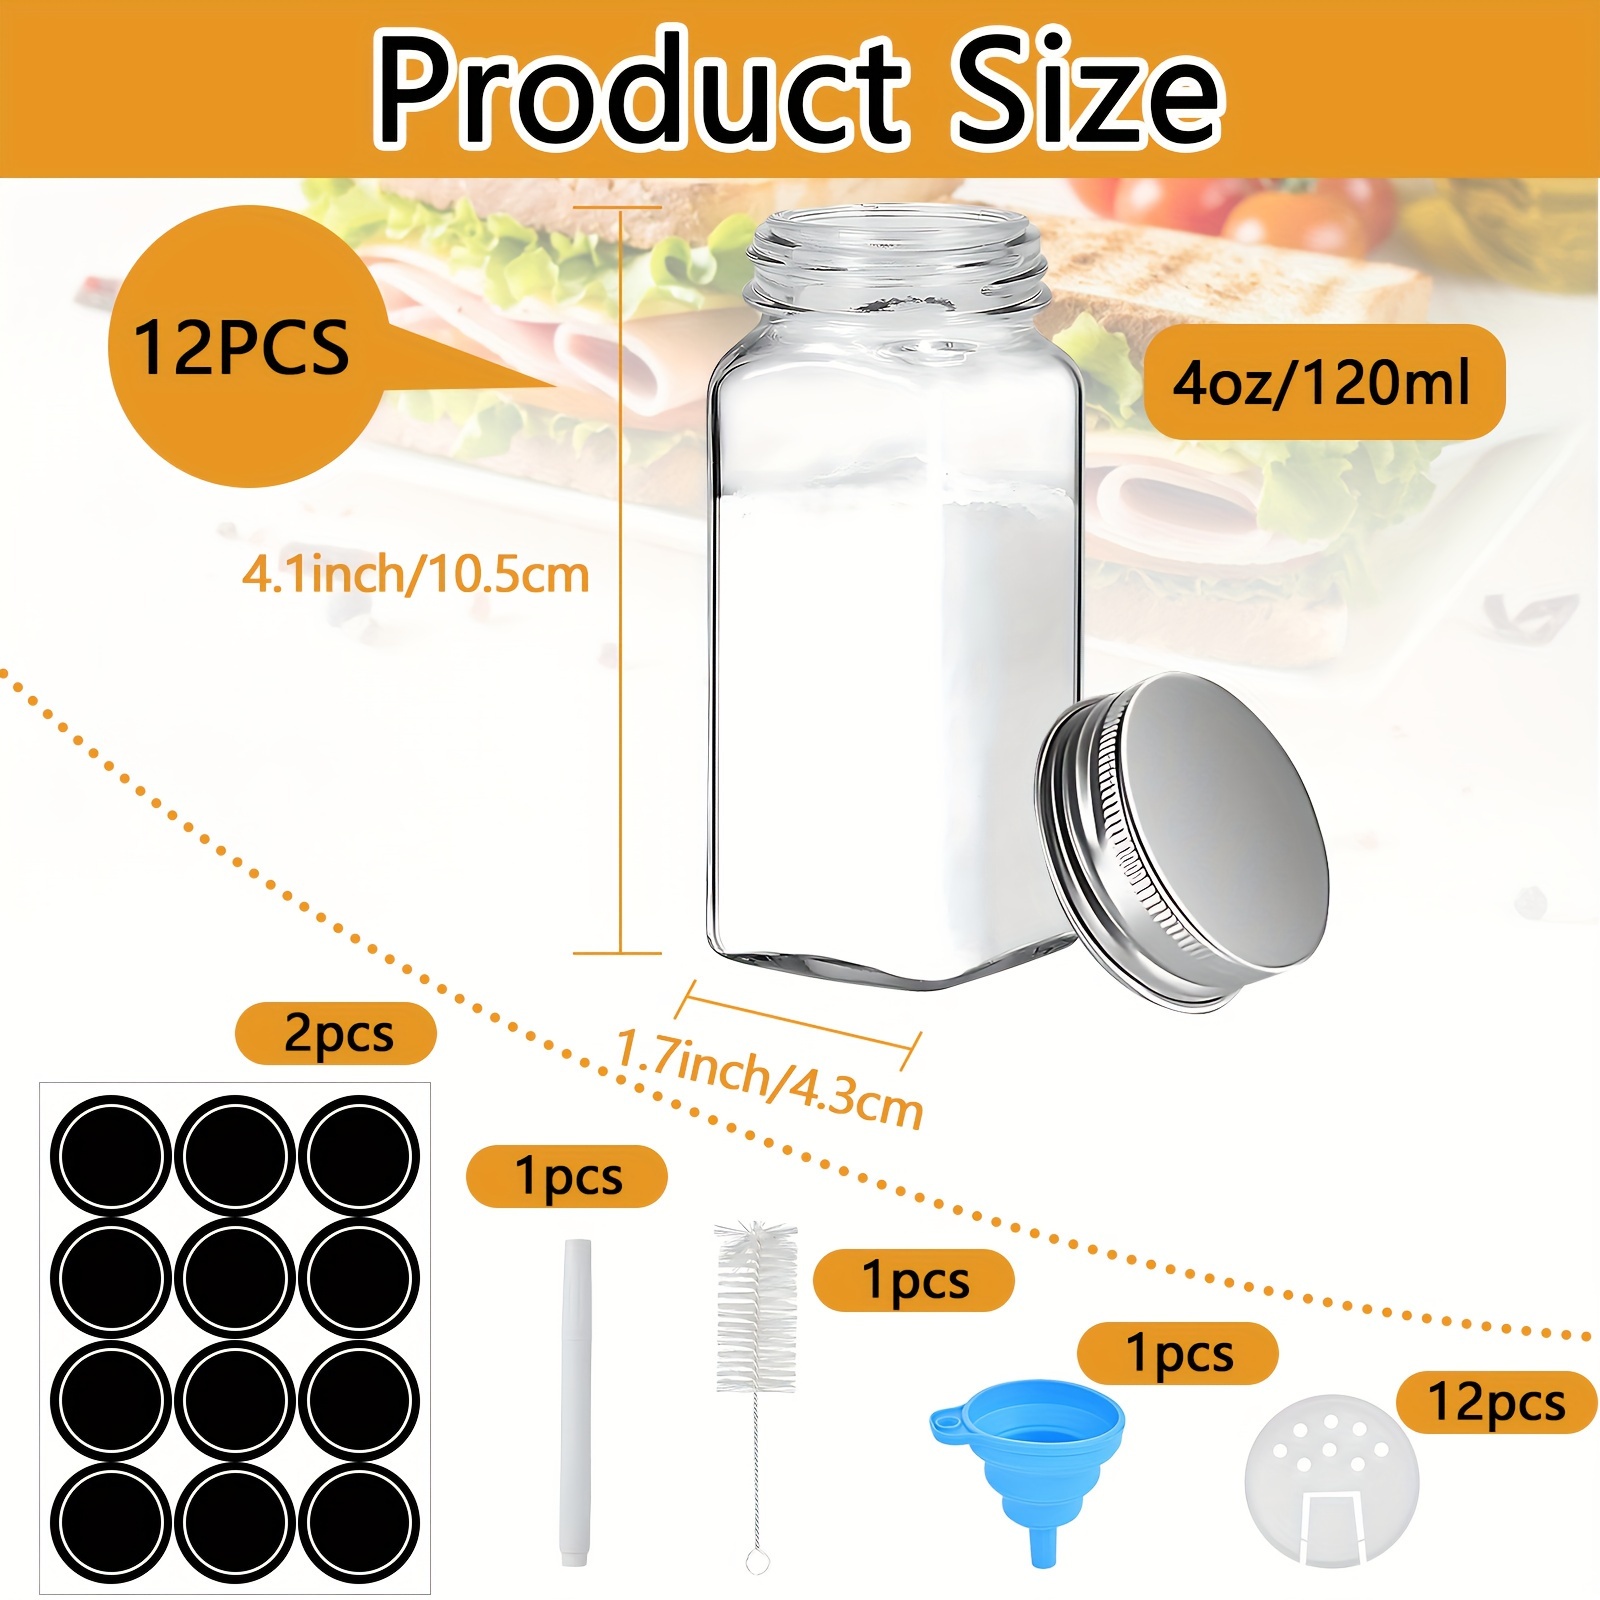 24 Pcs Glass Spice Jars with Spice & Pantry labels - 4oz Empty